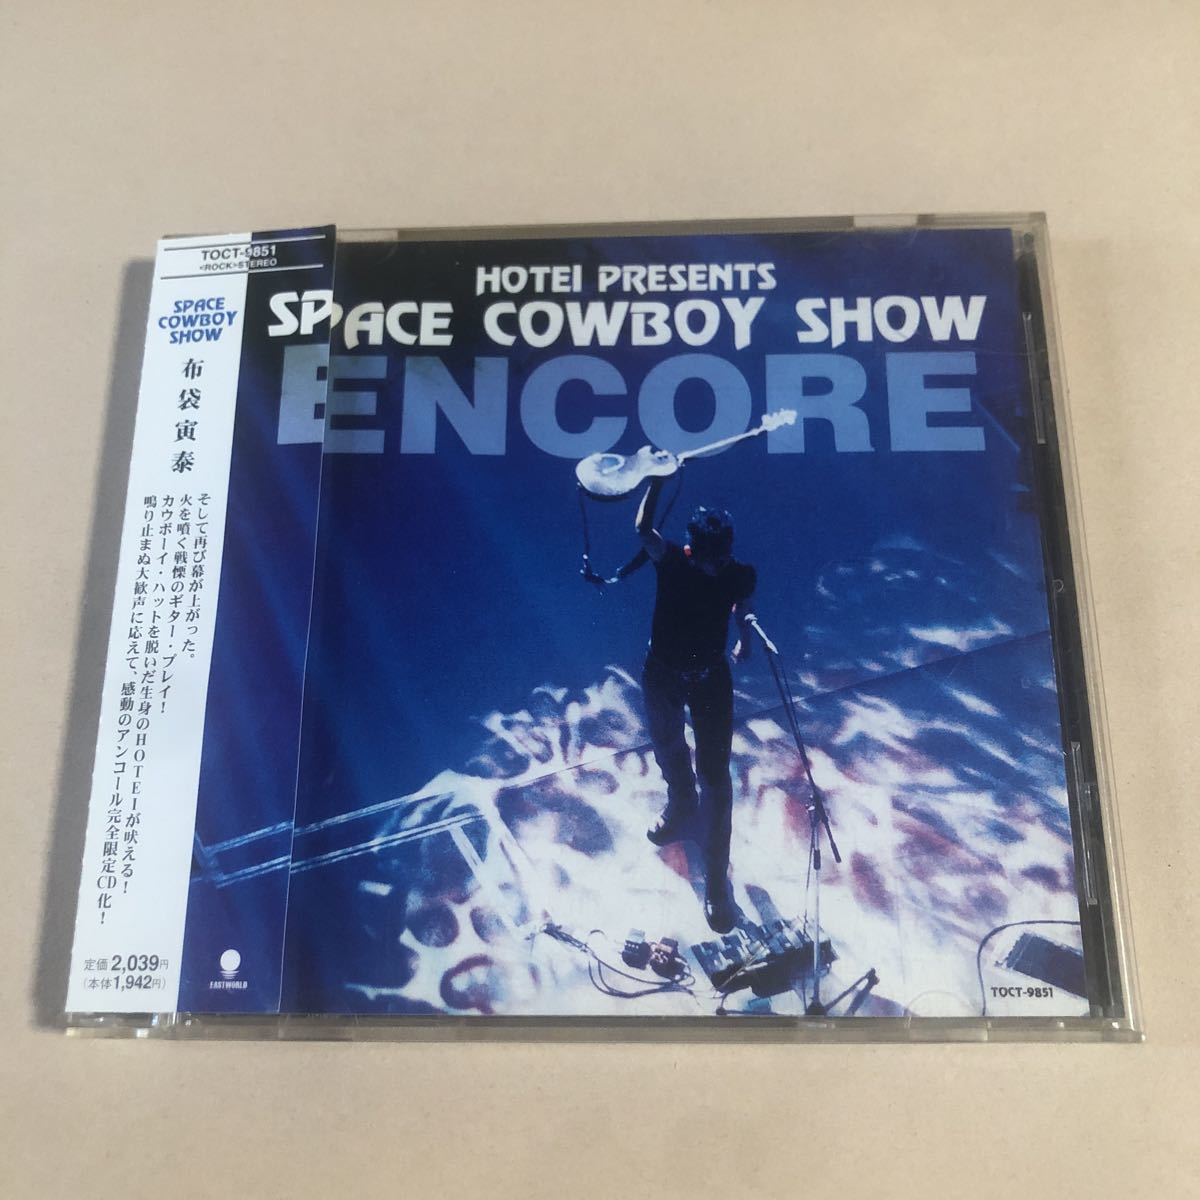 布袋寅泰 1CD「SPACE COWBOY SHOW ENCORE」_画像1